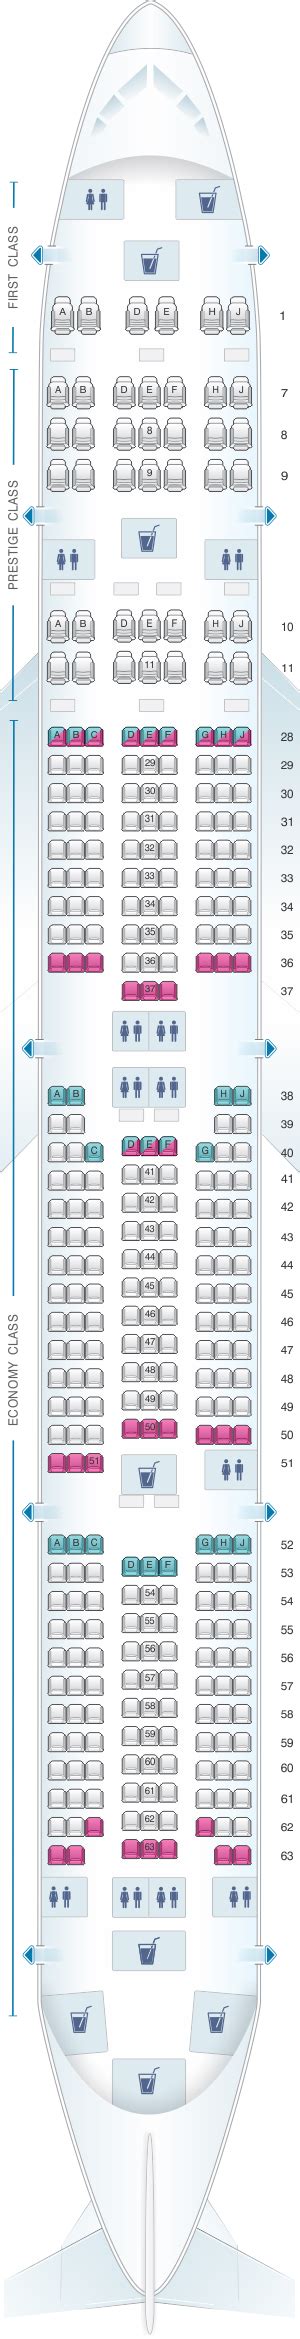 Korean Air B Er Seat Map Sexiz Pix